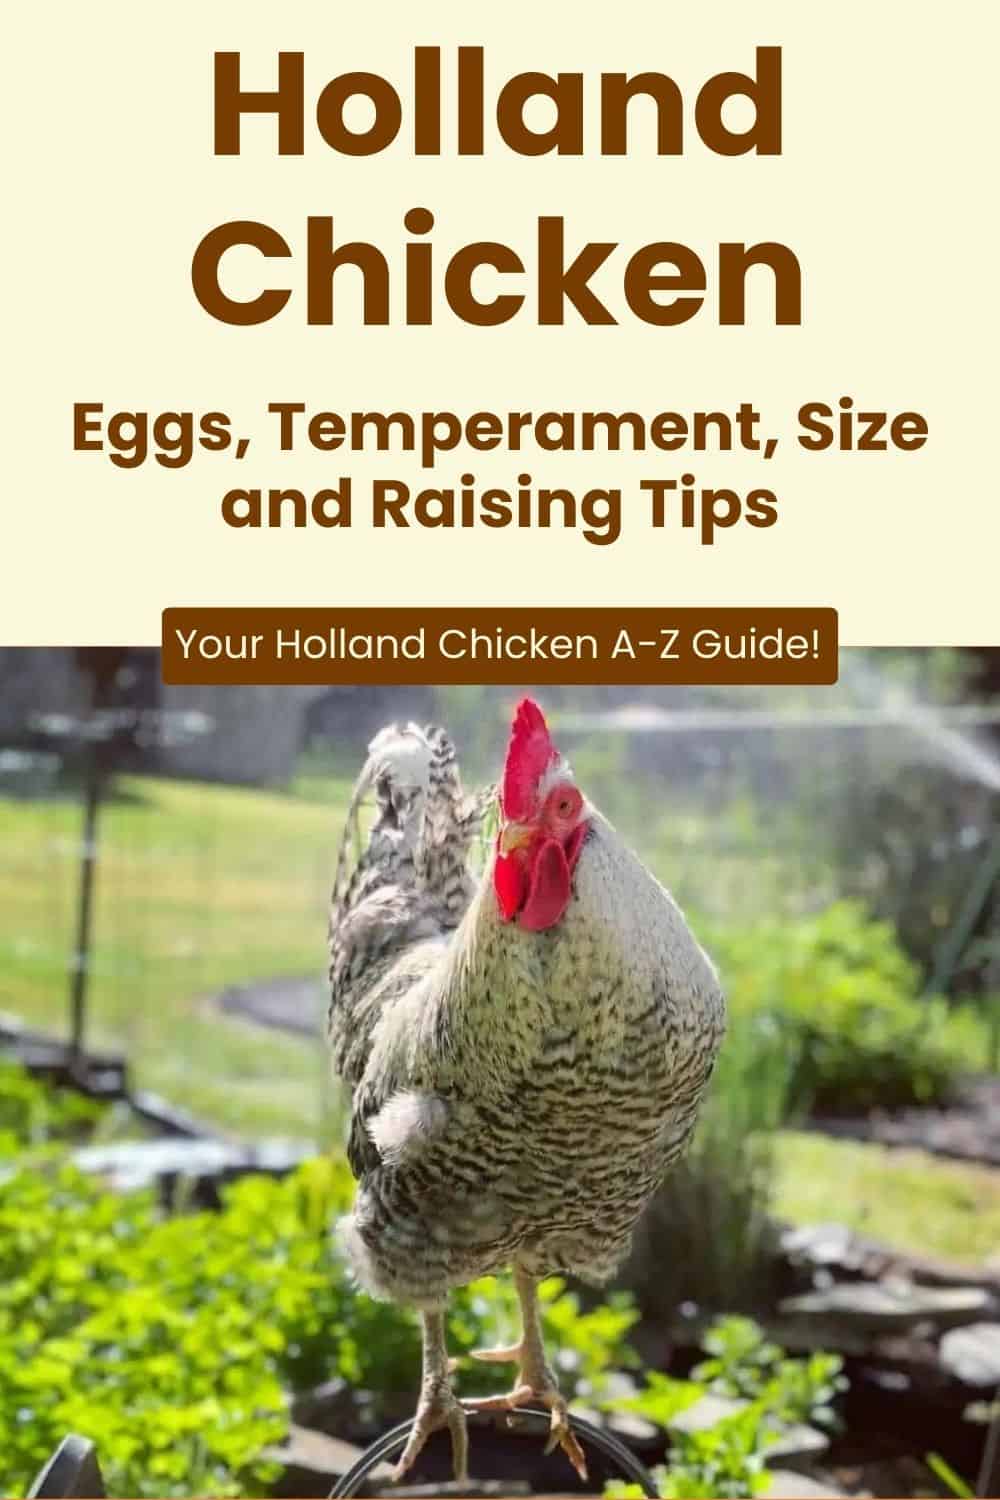 Holland Chicken breed